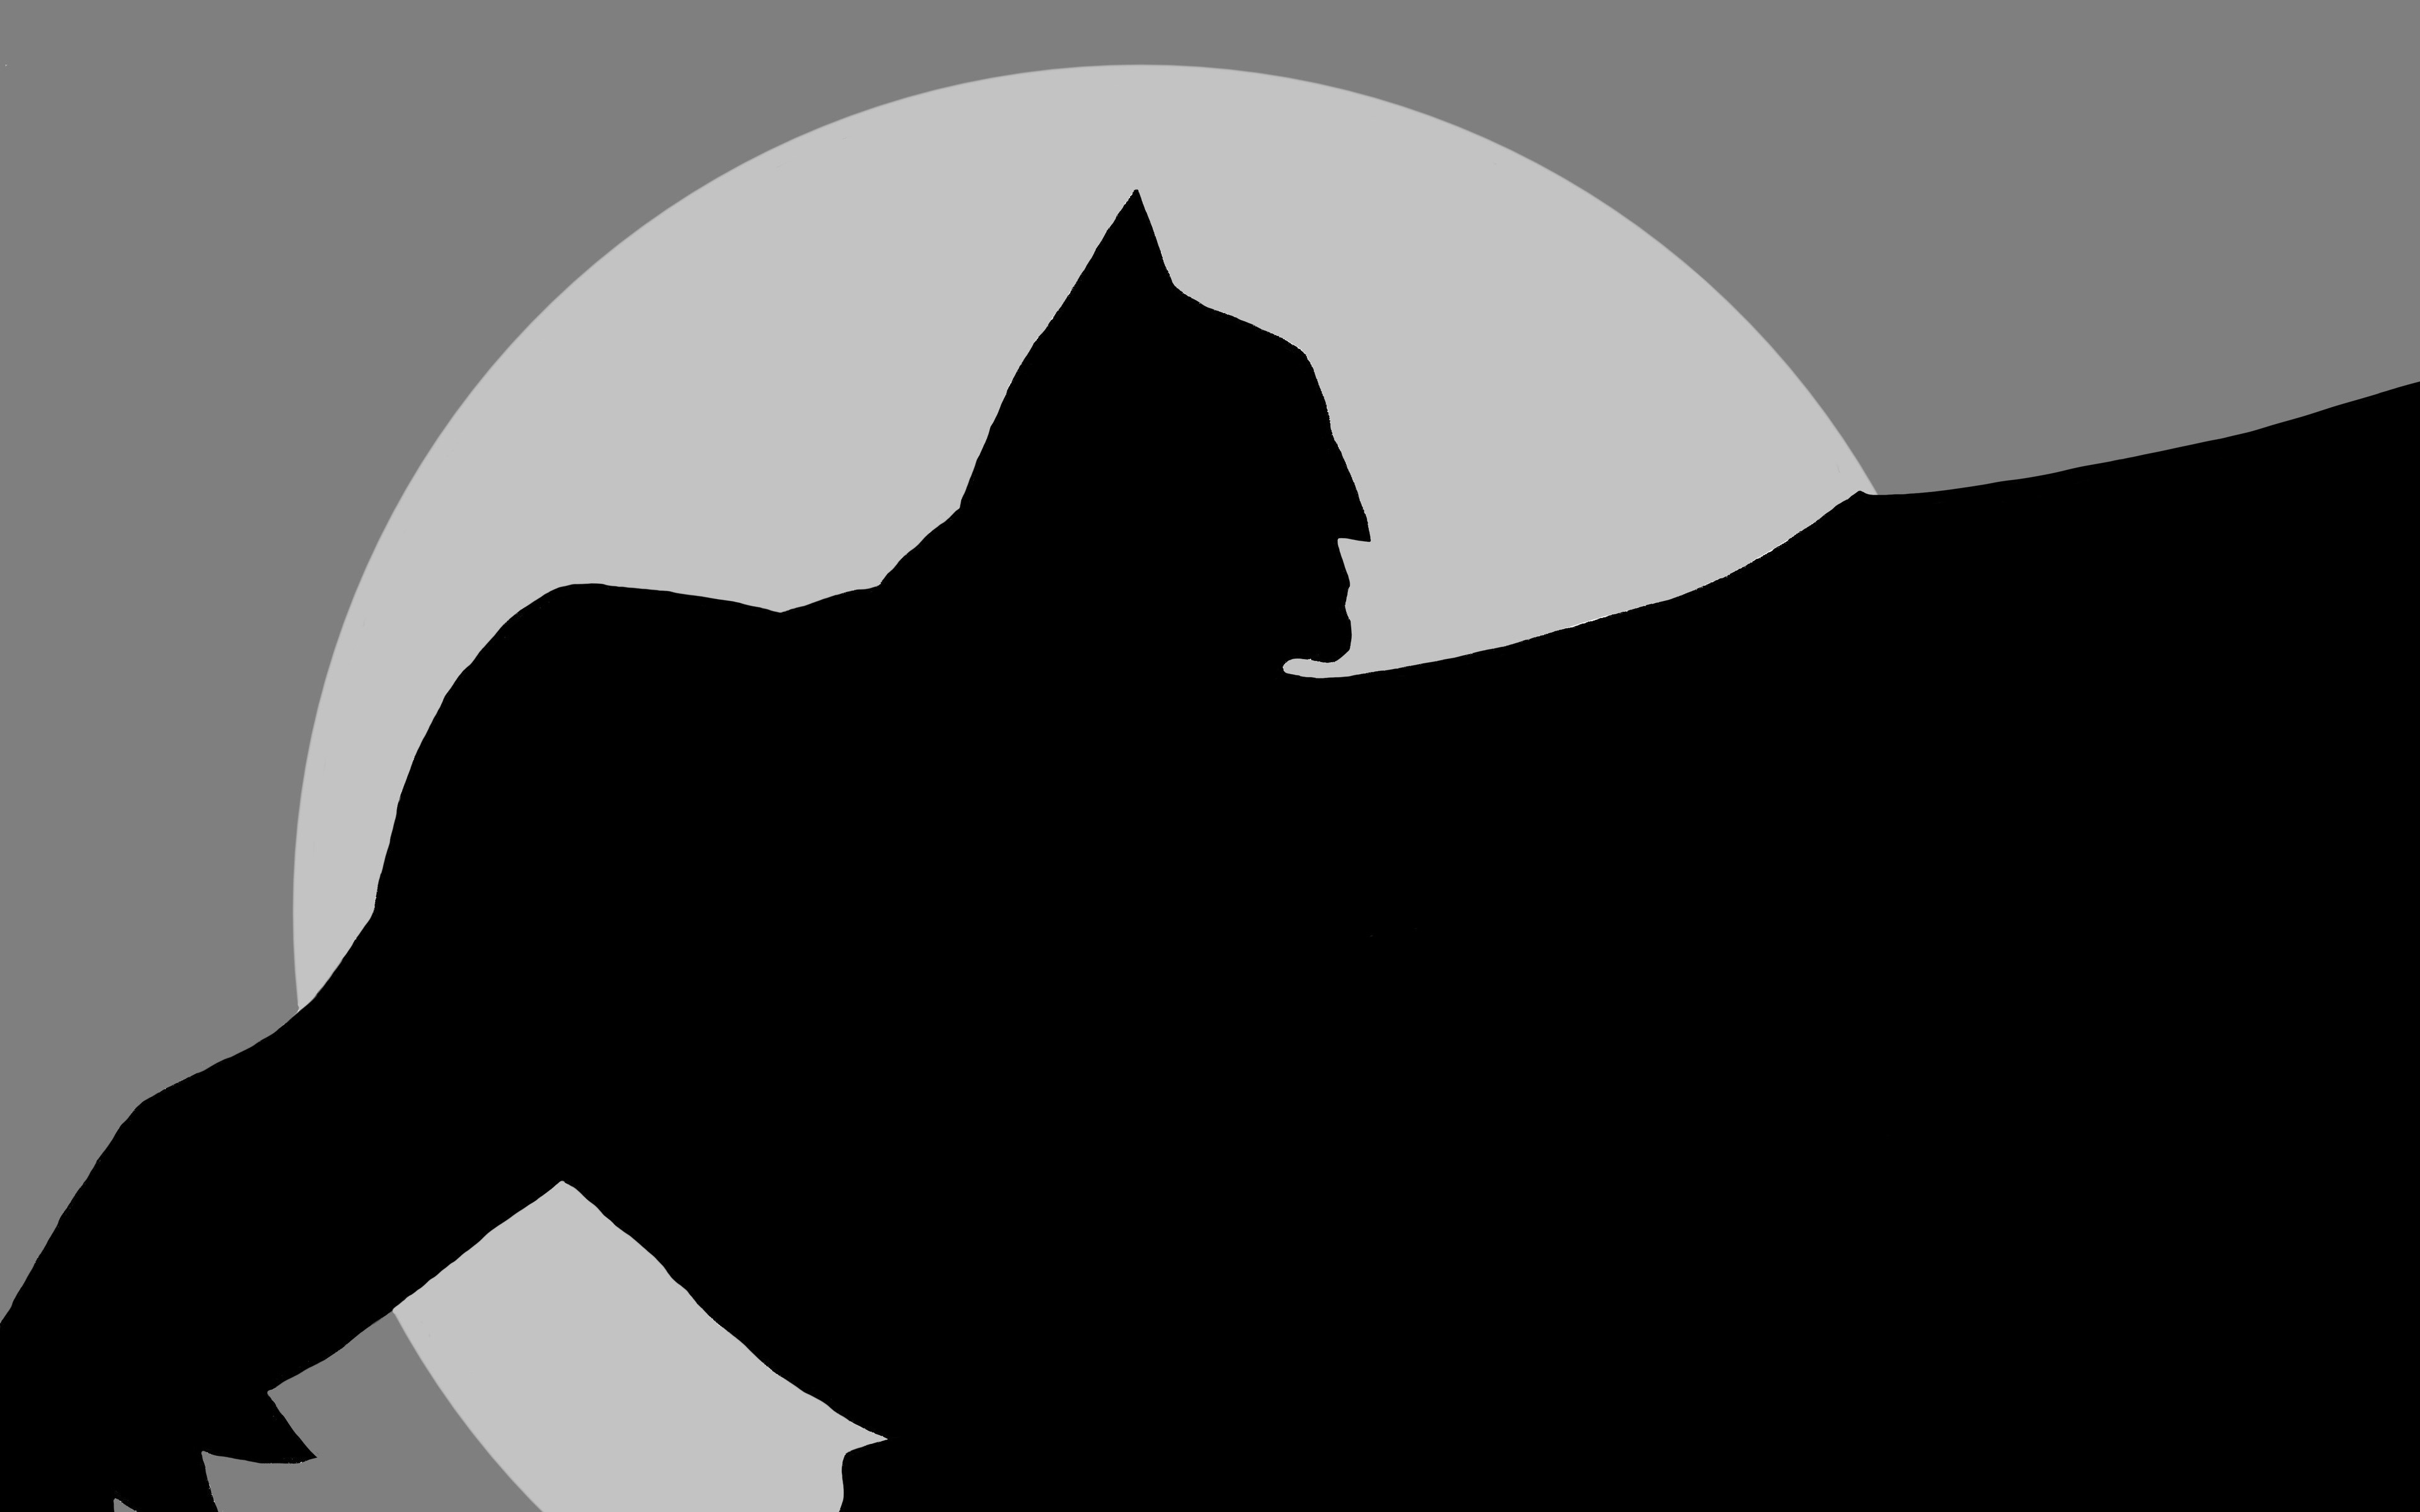 Download wallpapers 4k, Batman silhouette, minimal, superheroes, Batman, creative, DC comics, silhouette of Batman, fan art, Batman 4K, Batman minimalism